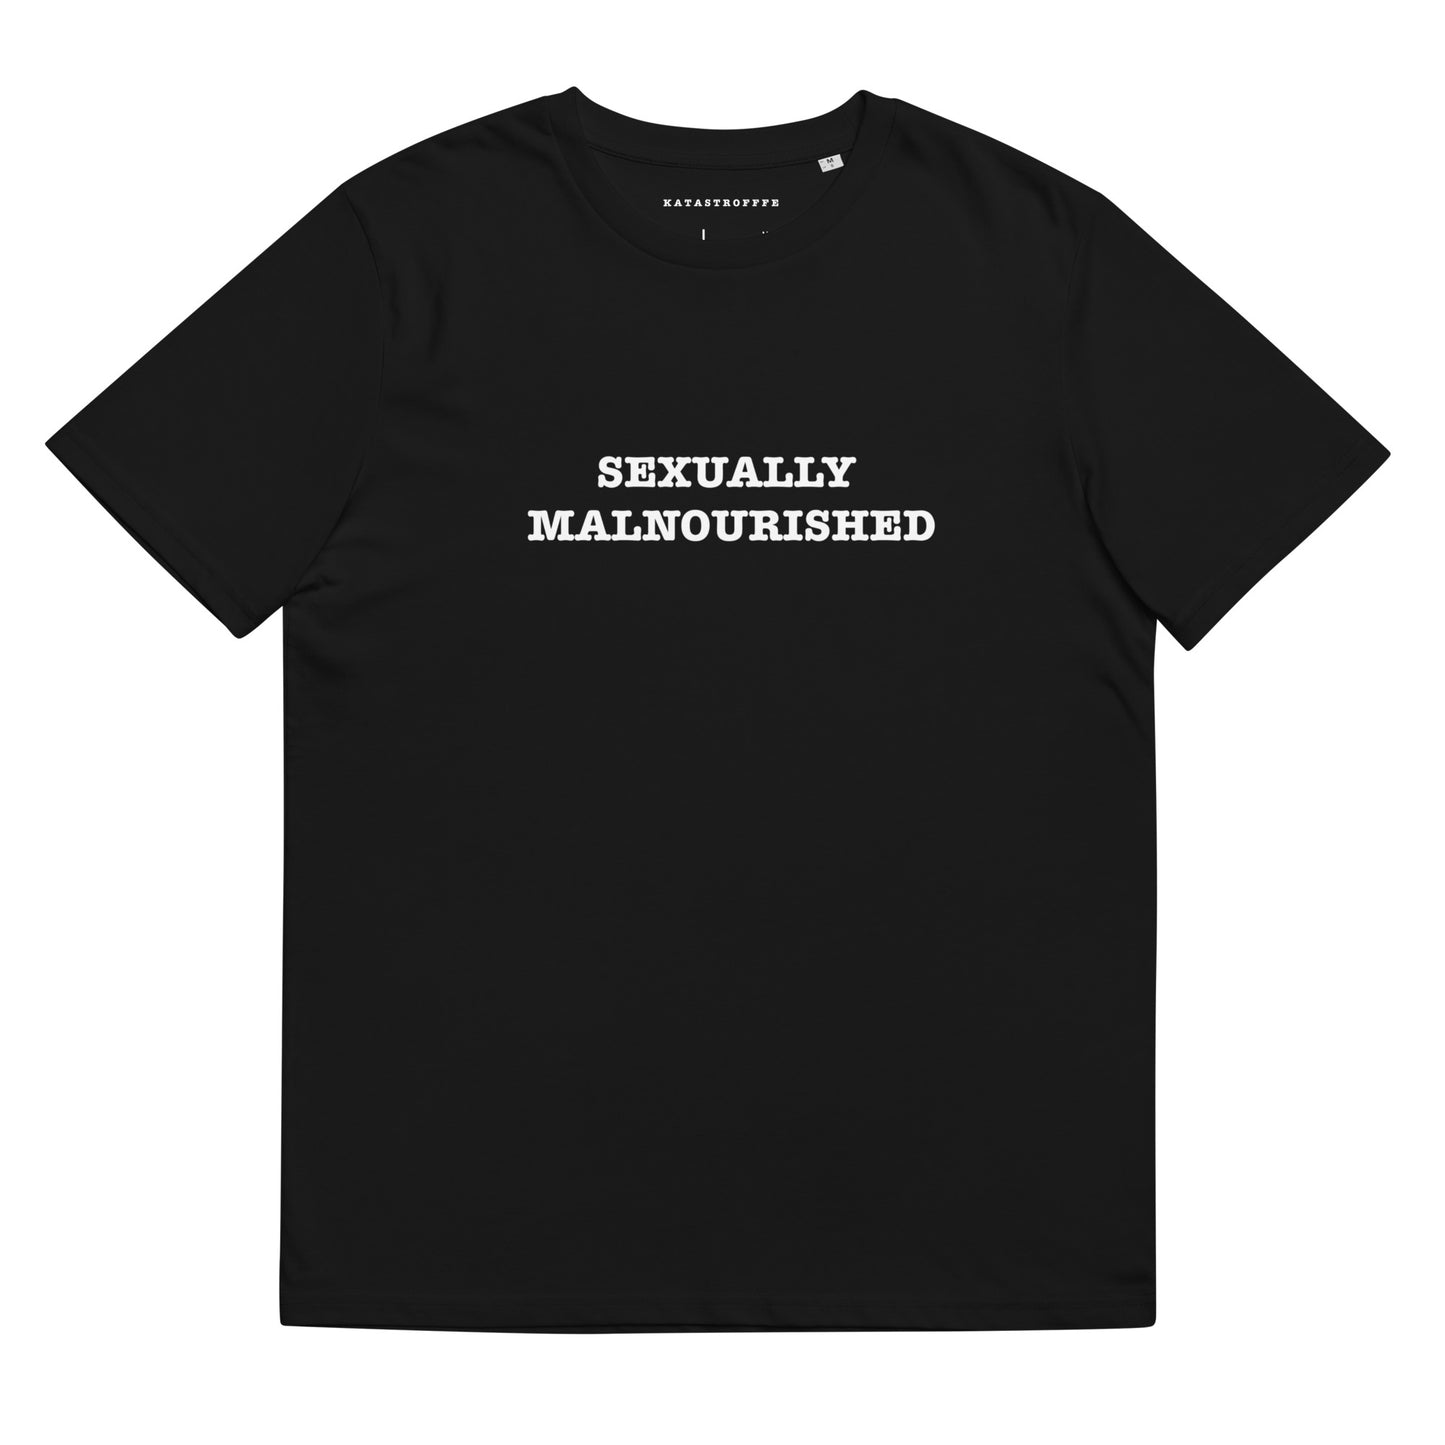 SEXUALLY MALNOURISHED Katastrofffe Unisex organic cotton t-shirt